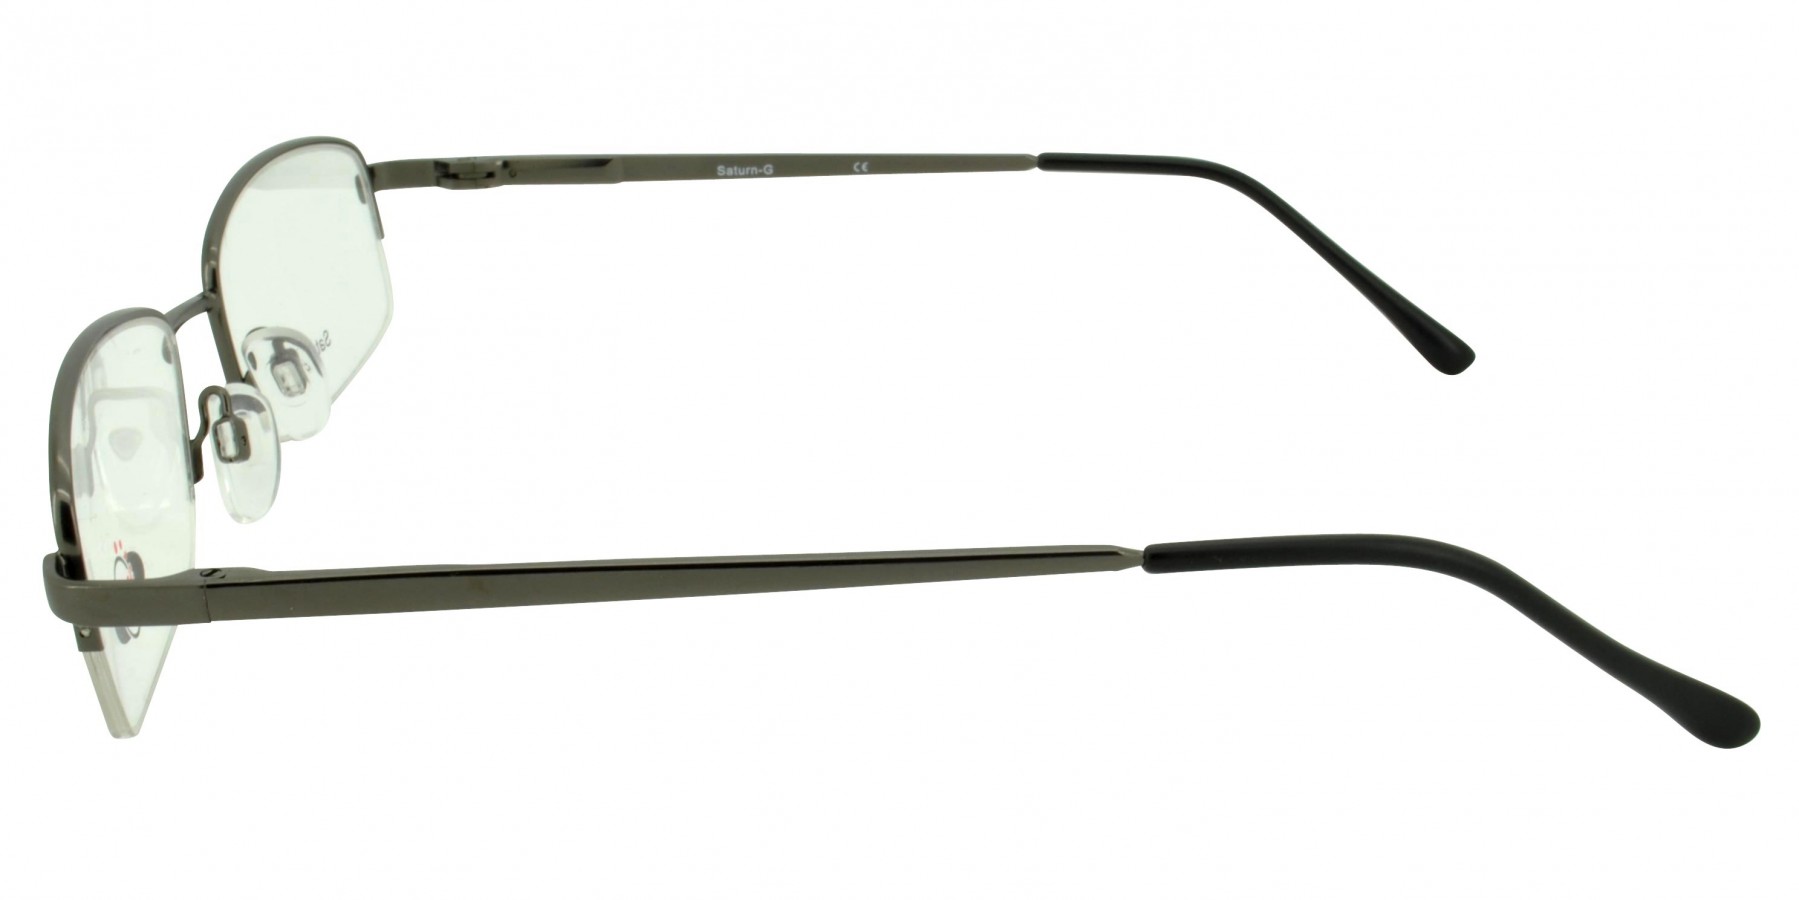 Saturn G Semi Rimless Frame Prescription Glasses